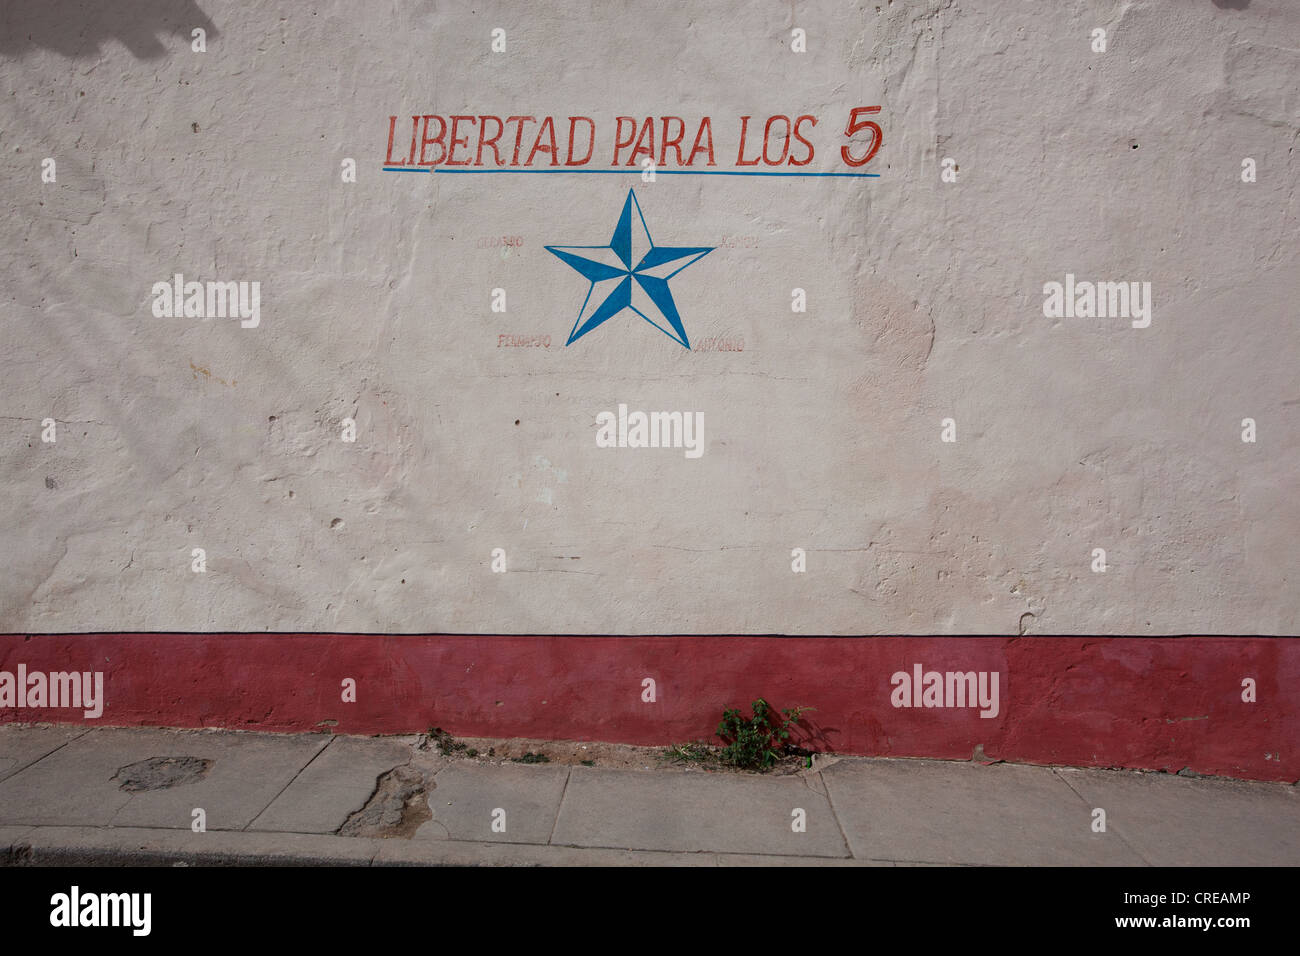 Libertad Para Los 5 sign on a wall in Trinidad, Cuba. Stock Photo